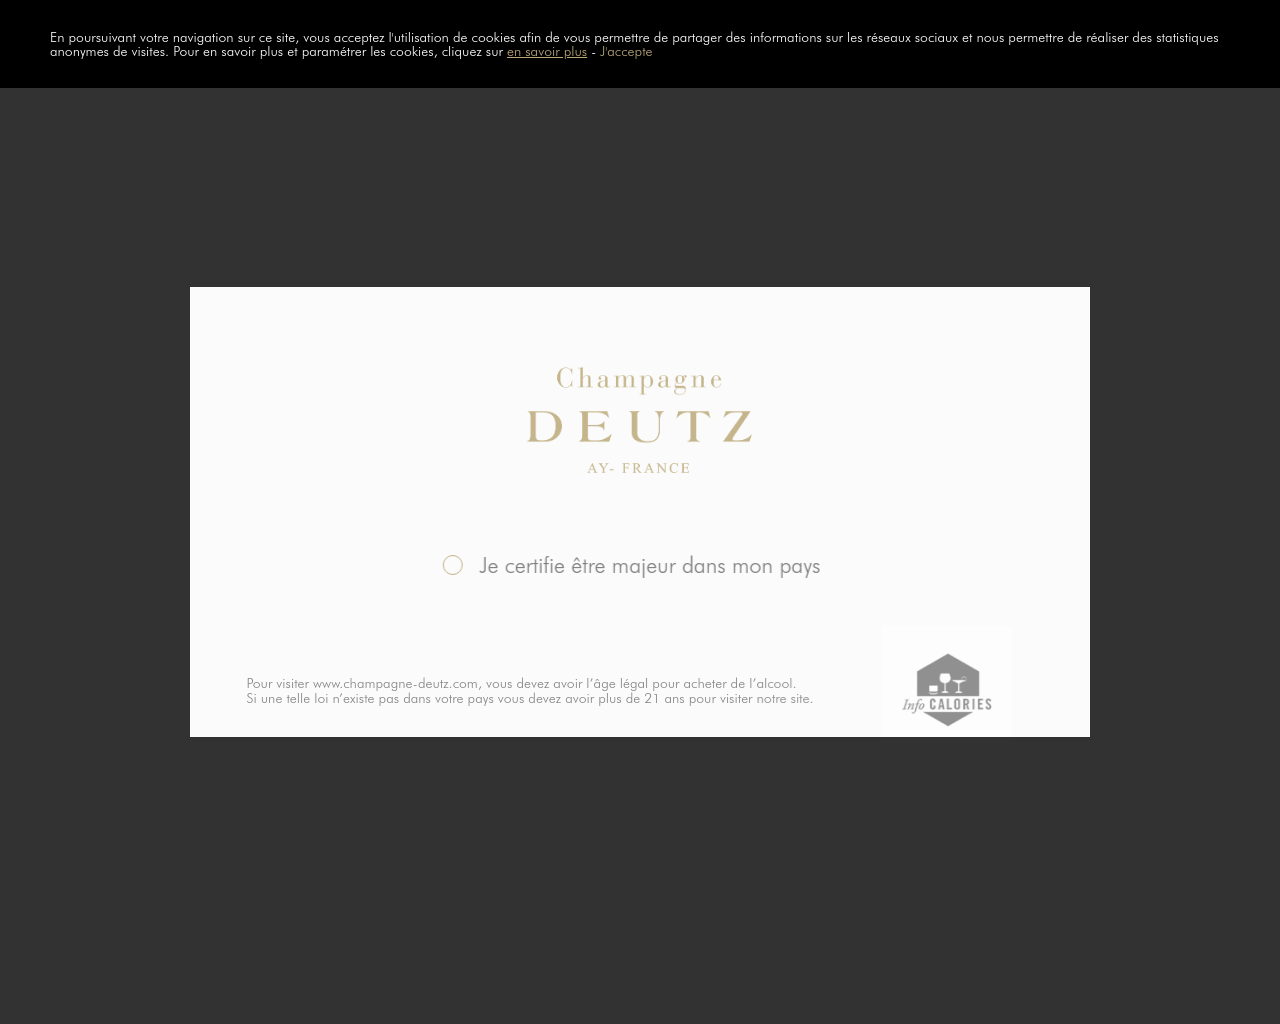 champagne-deutz.com